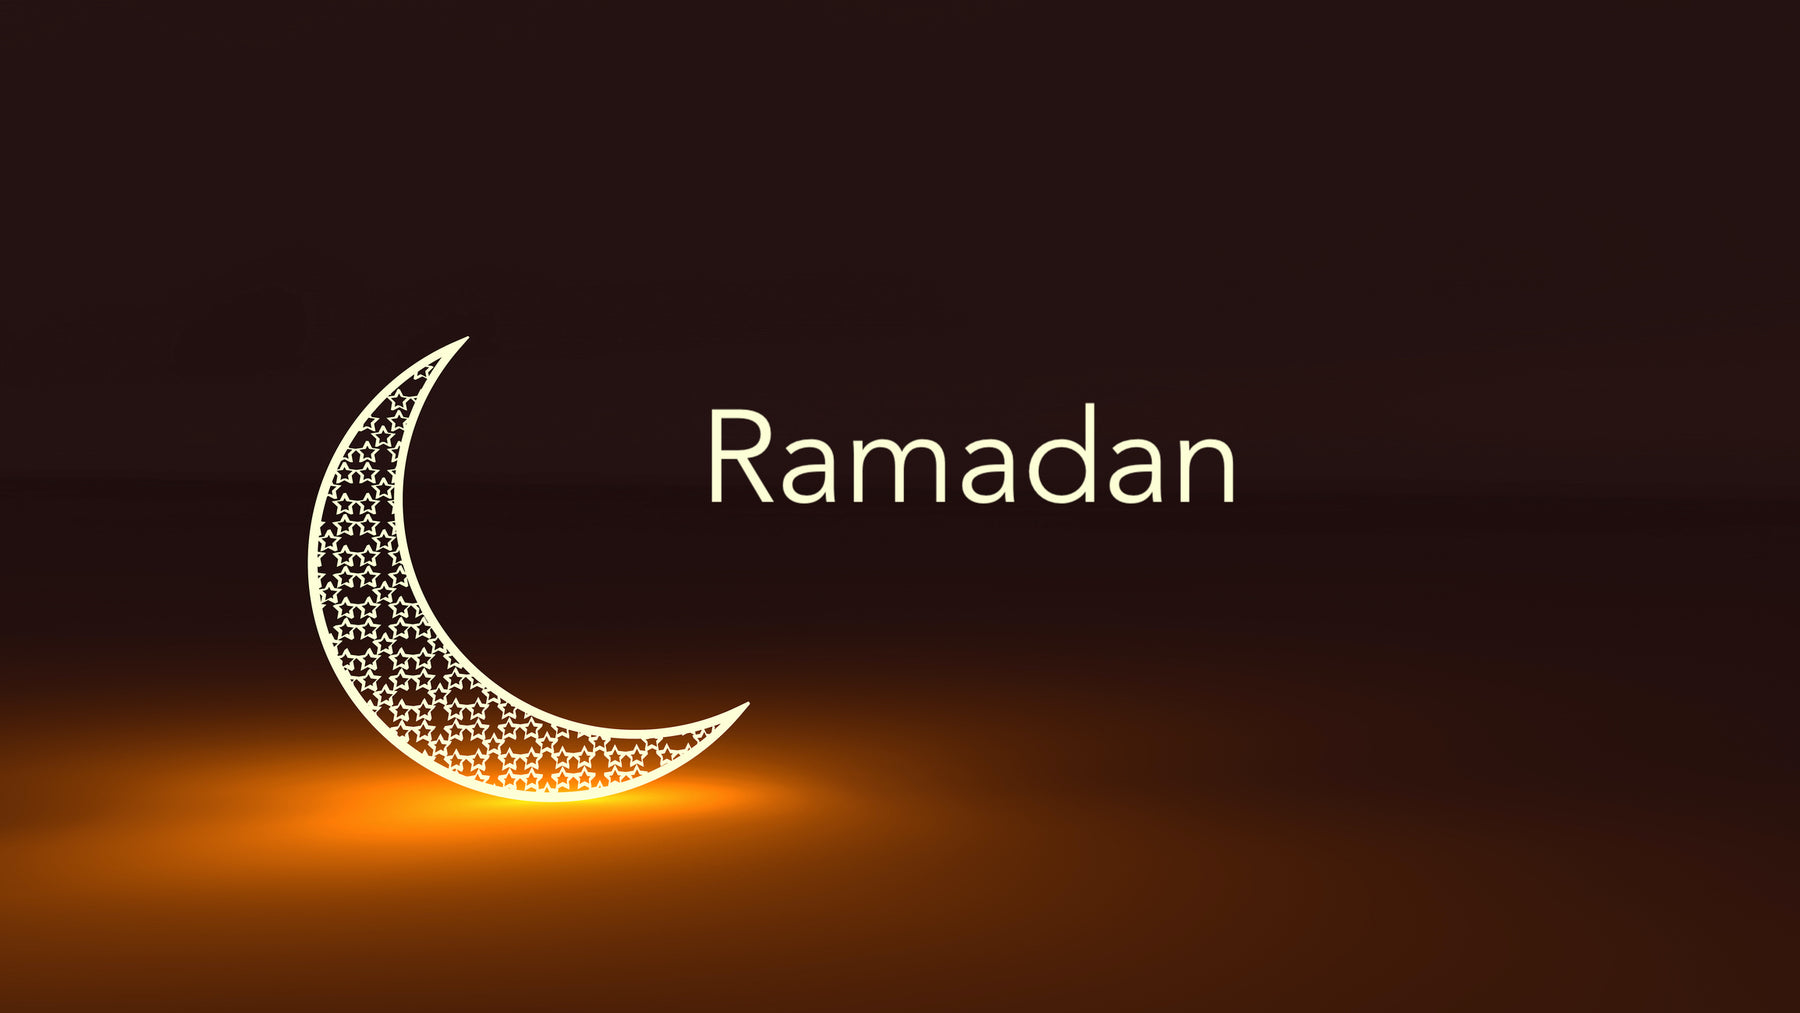 Ramadan Facts for Kids